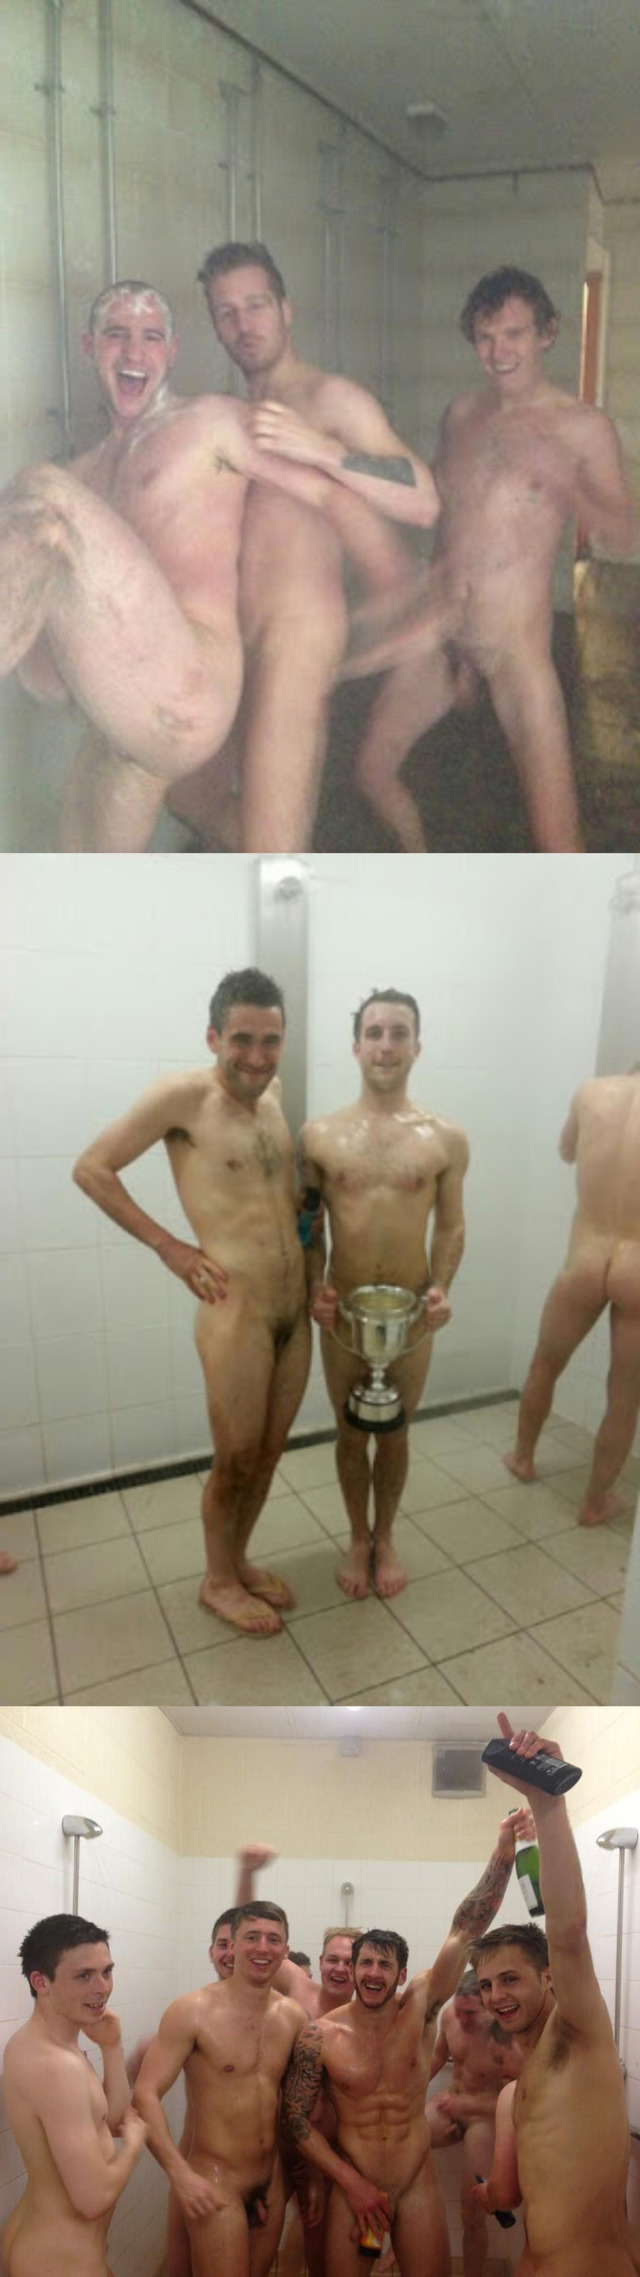 footballers celebration naked lockerroom dicks out